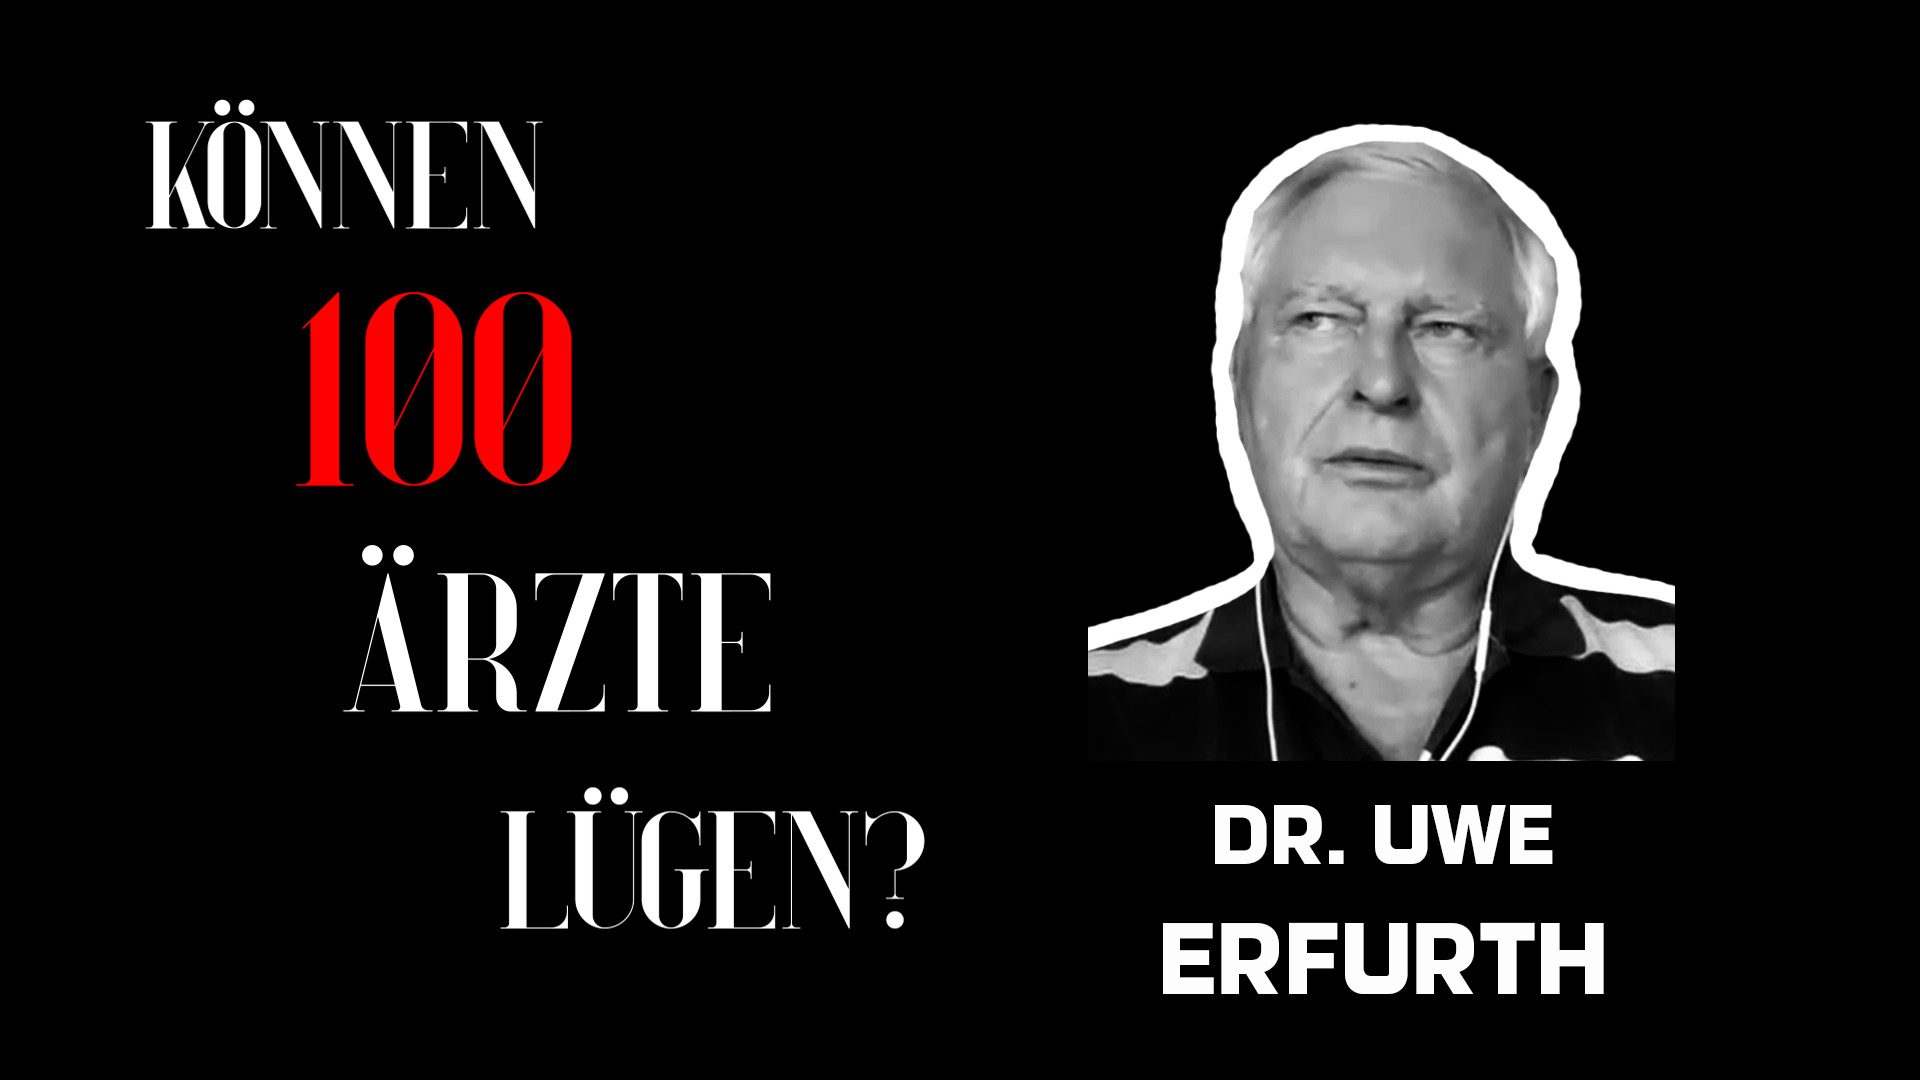 Uwe Erfurth